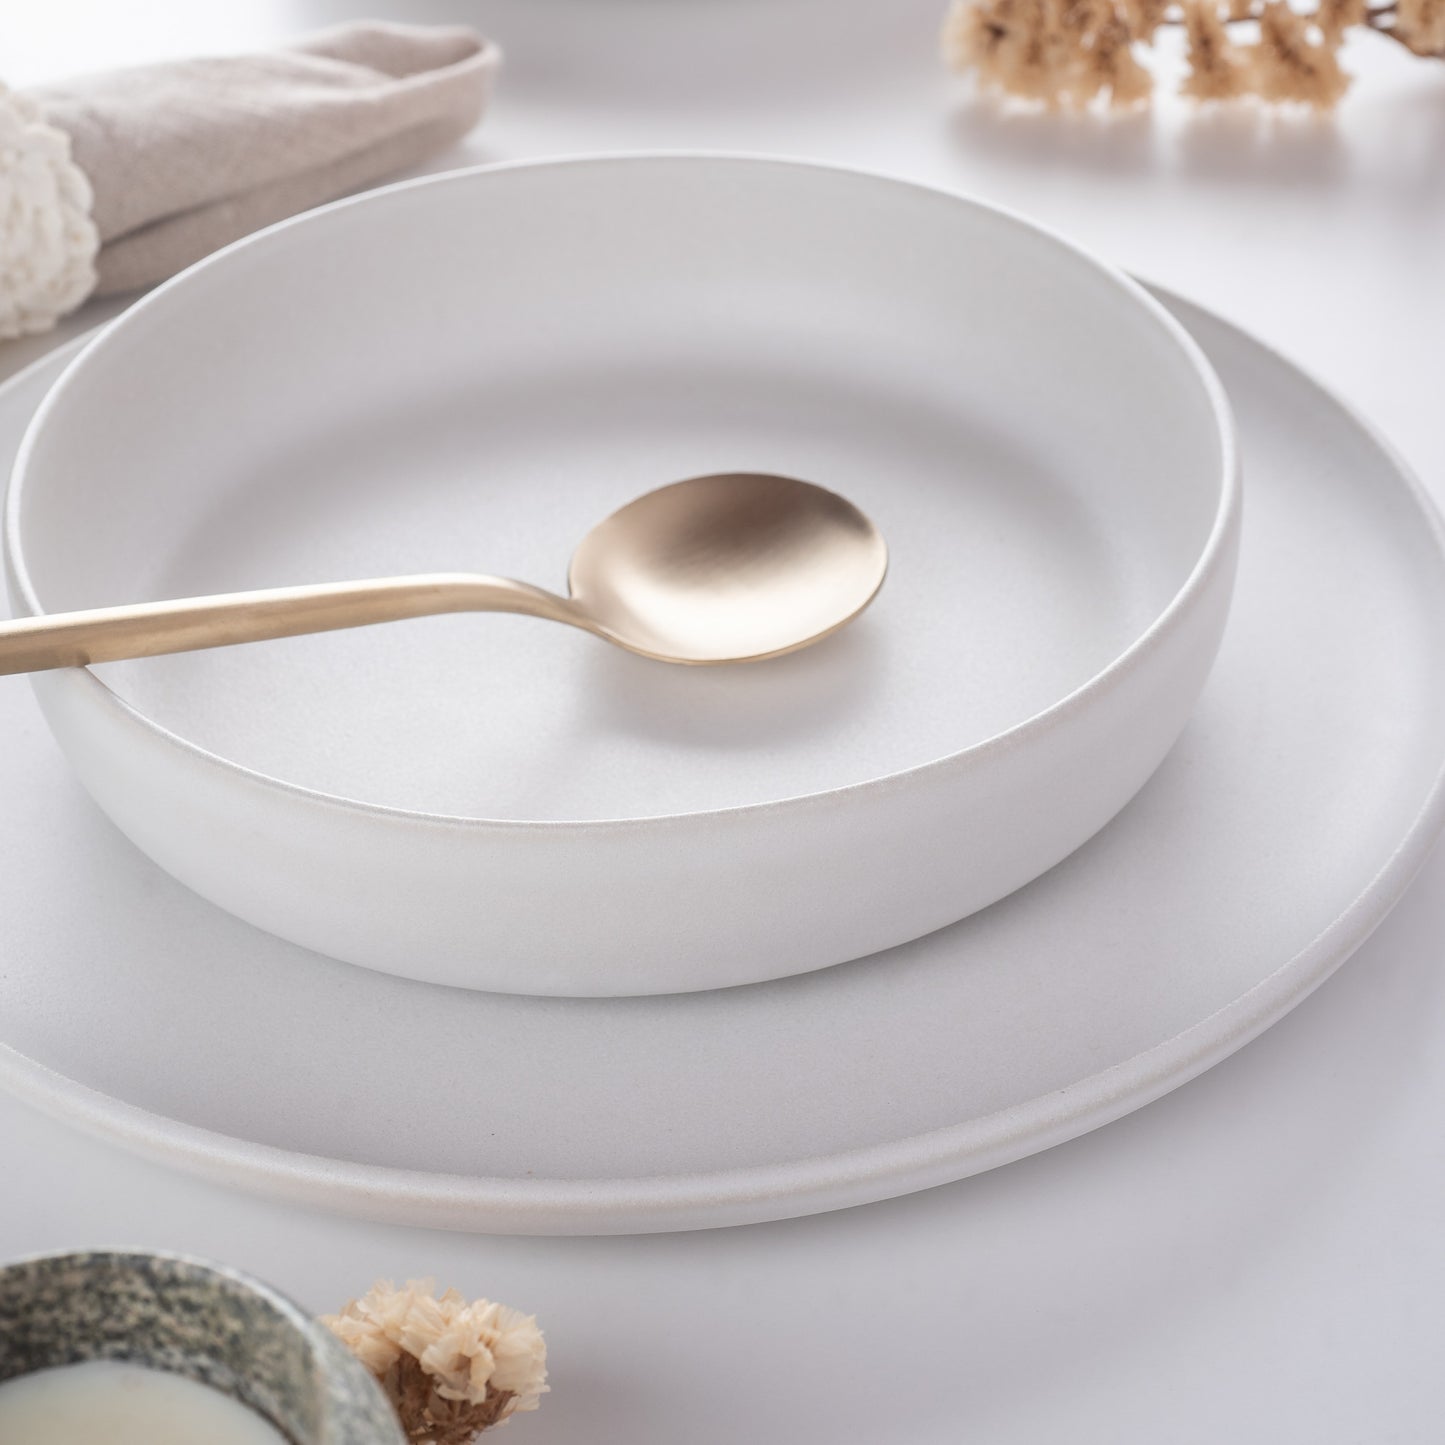 Macchio Stoneware Dinnerware Set - White Matte - Crafted in Portugal - Scratch-Resistant